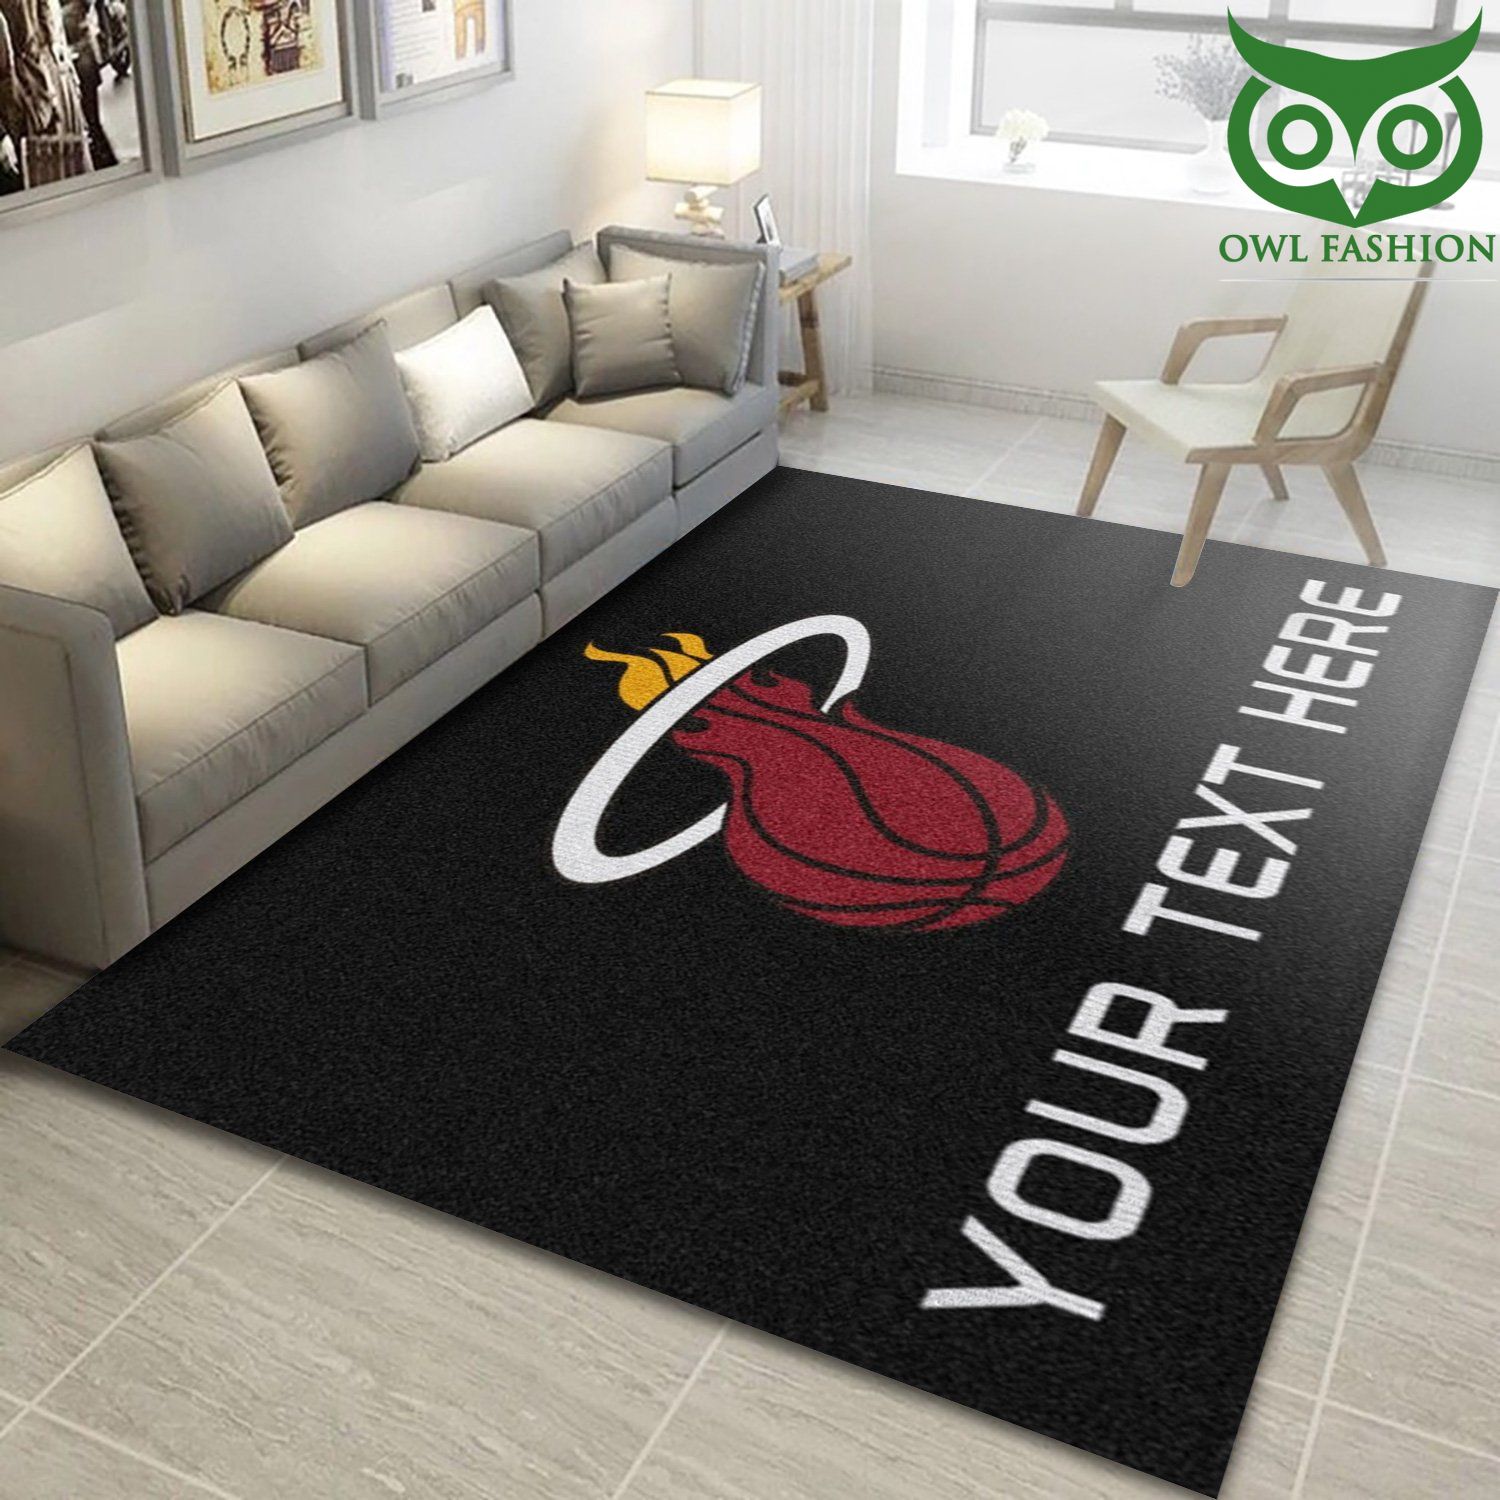 Customizable Miami Heat Area NBA room decorate floor carpet rug 